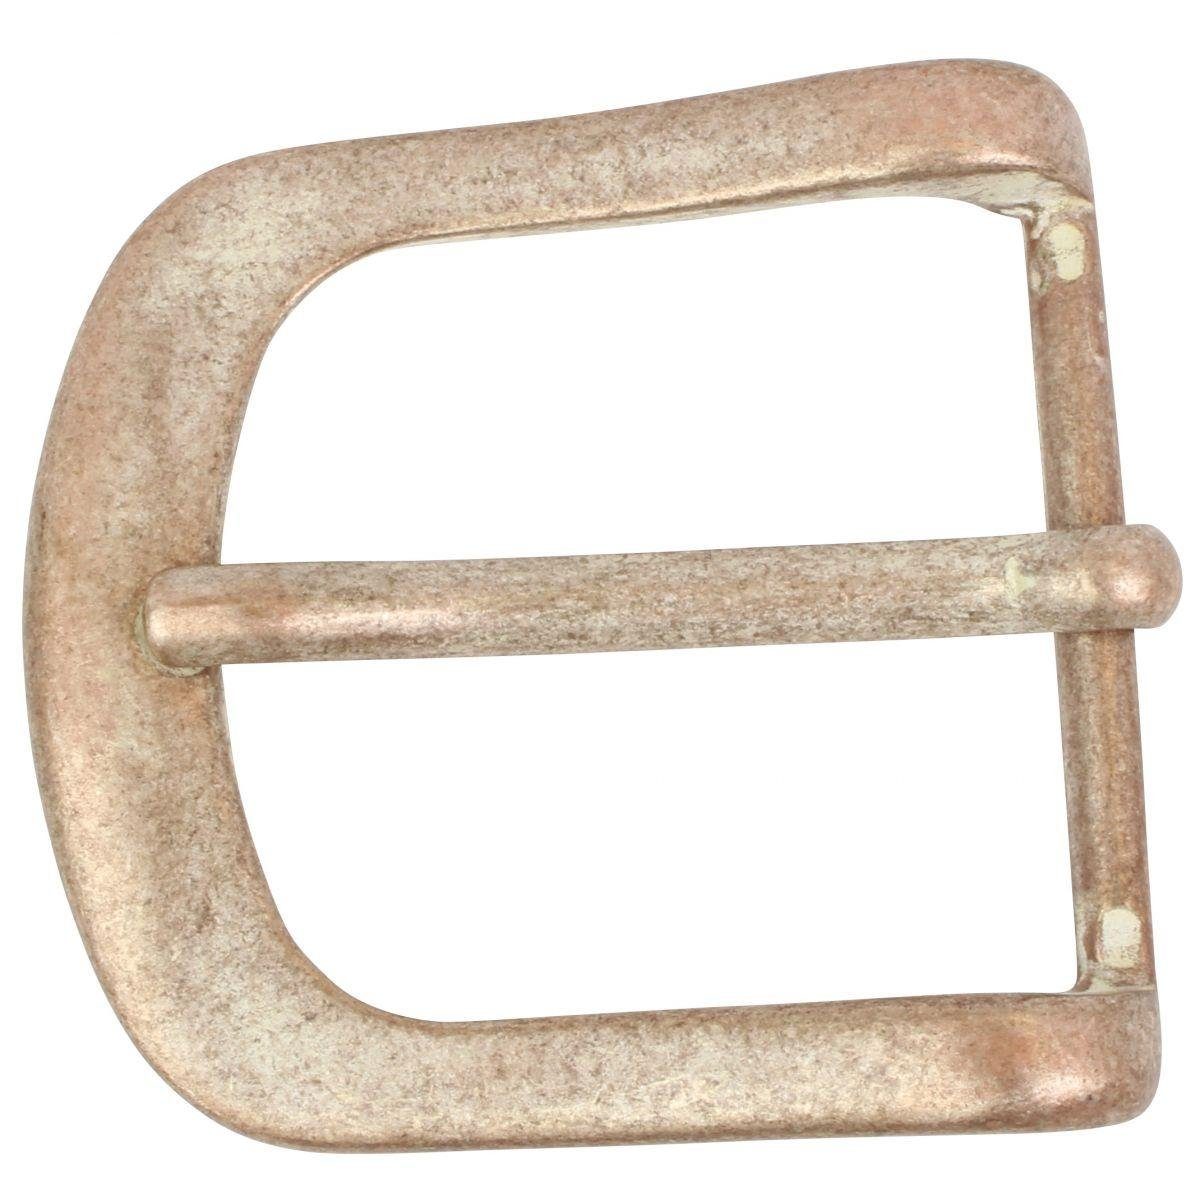 Rame 4,0 - - Dorn-Schließe Wechselschließe - cm Gürtelschnalle BELTINGER Gürtel Gürtelschließe 40mm